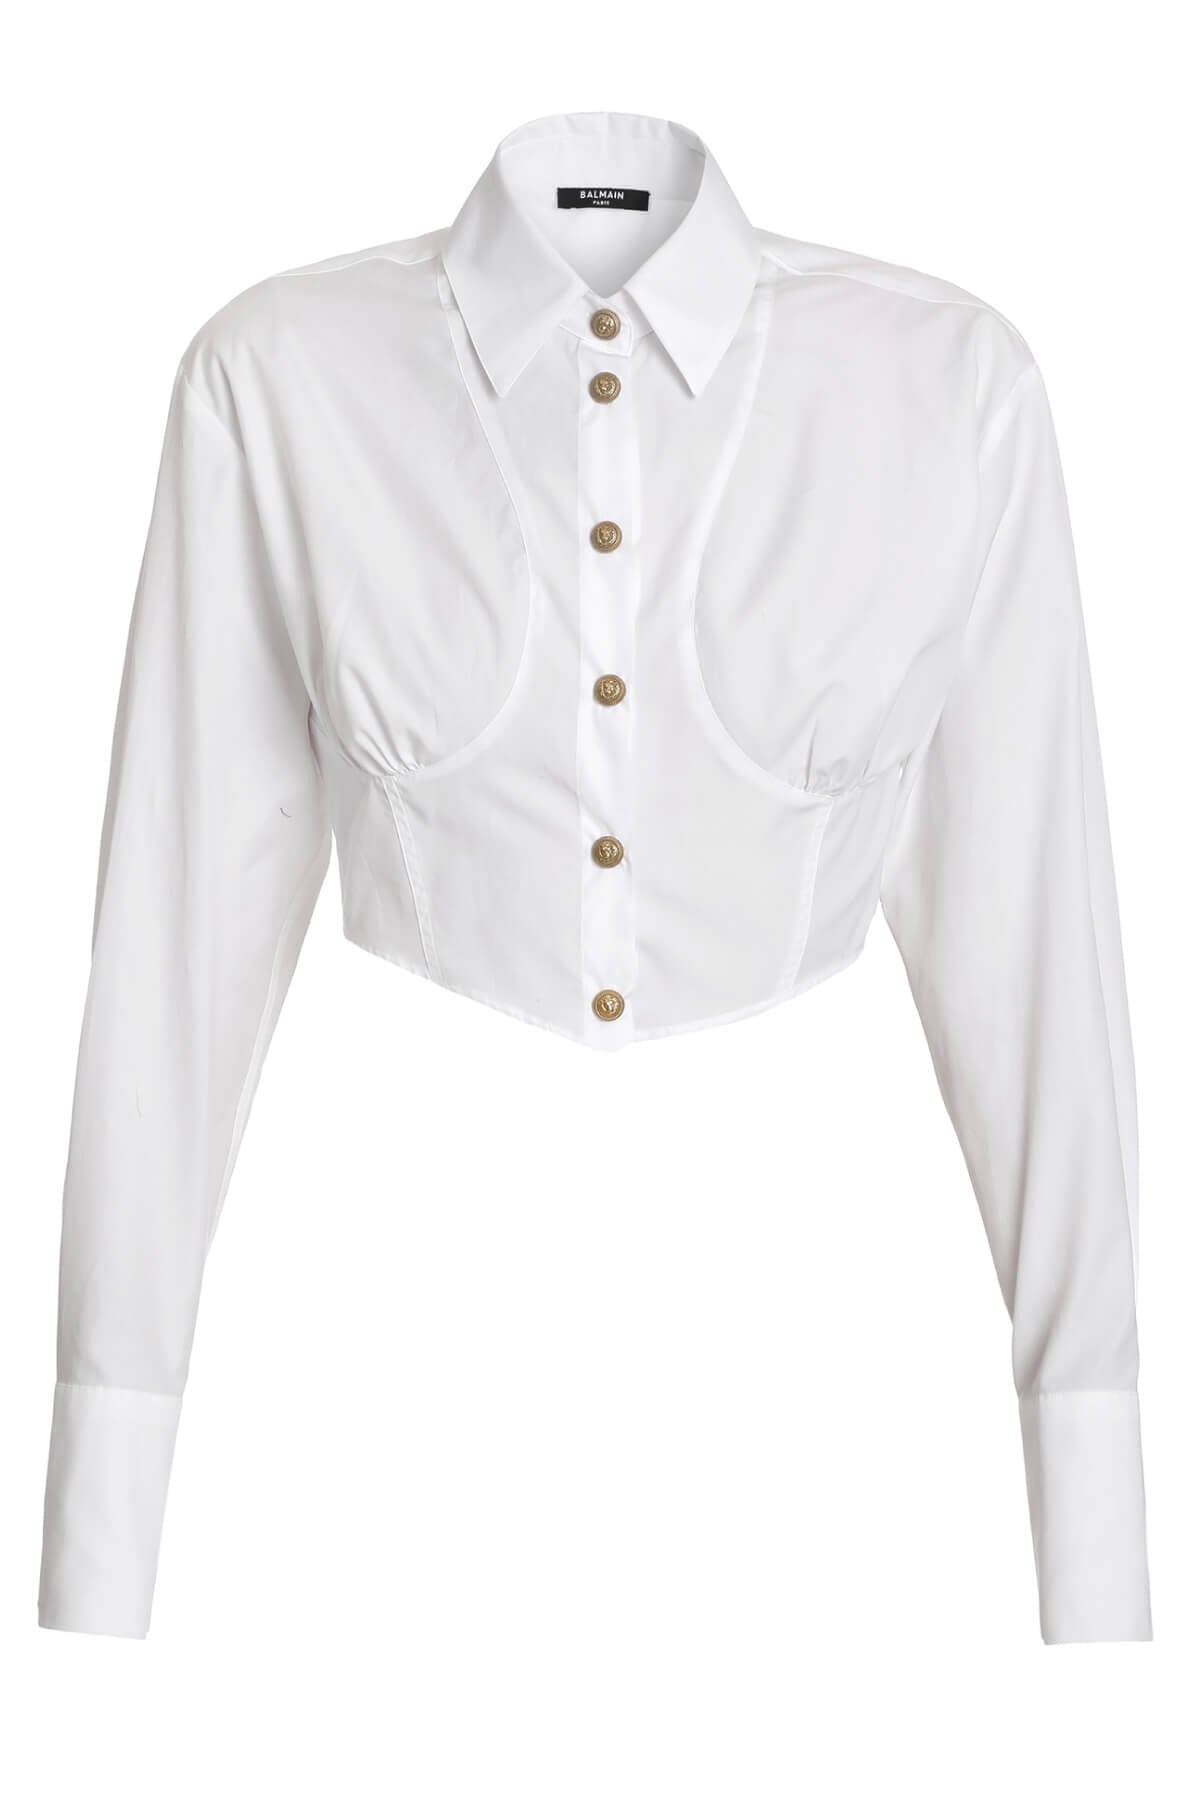 Balmain Cropped Cotton Shirt - White